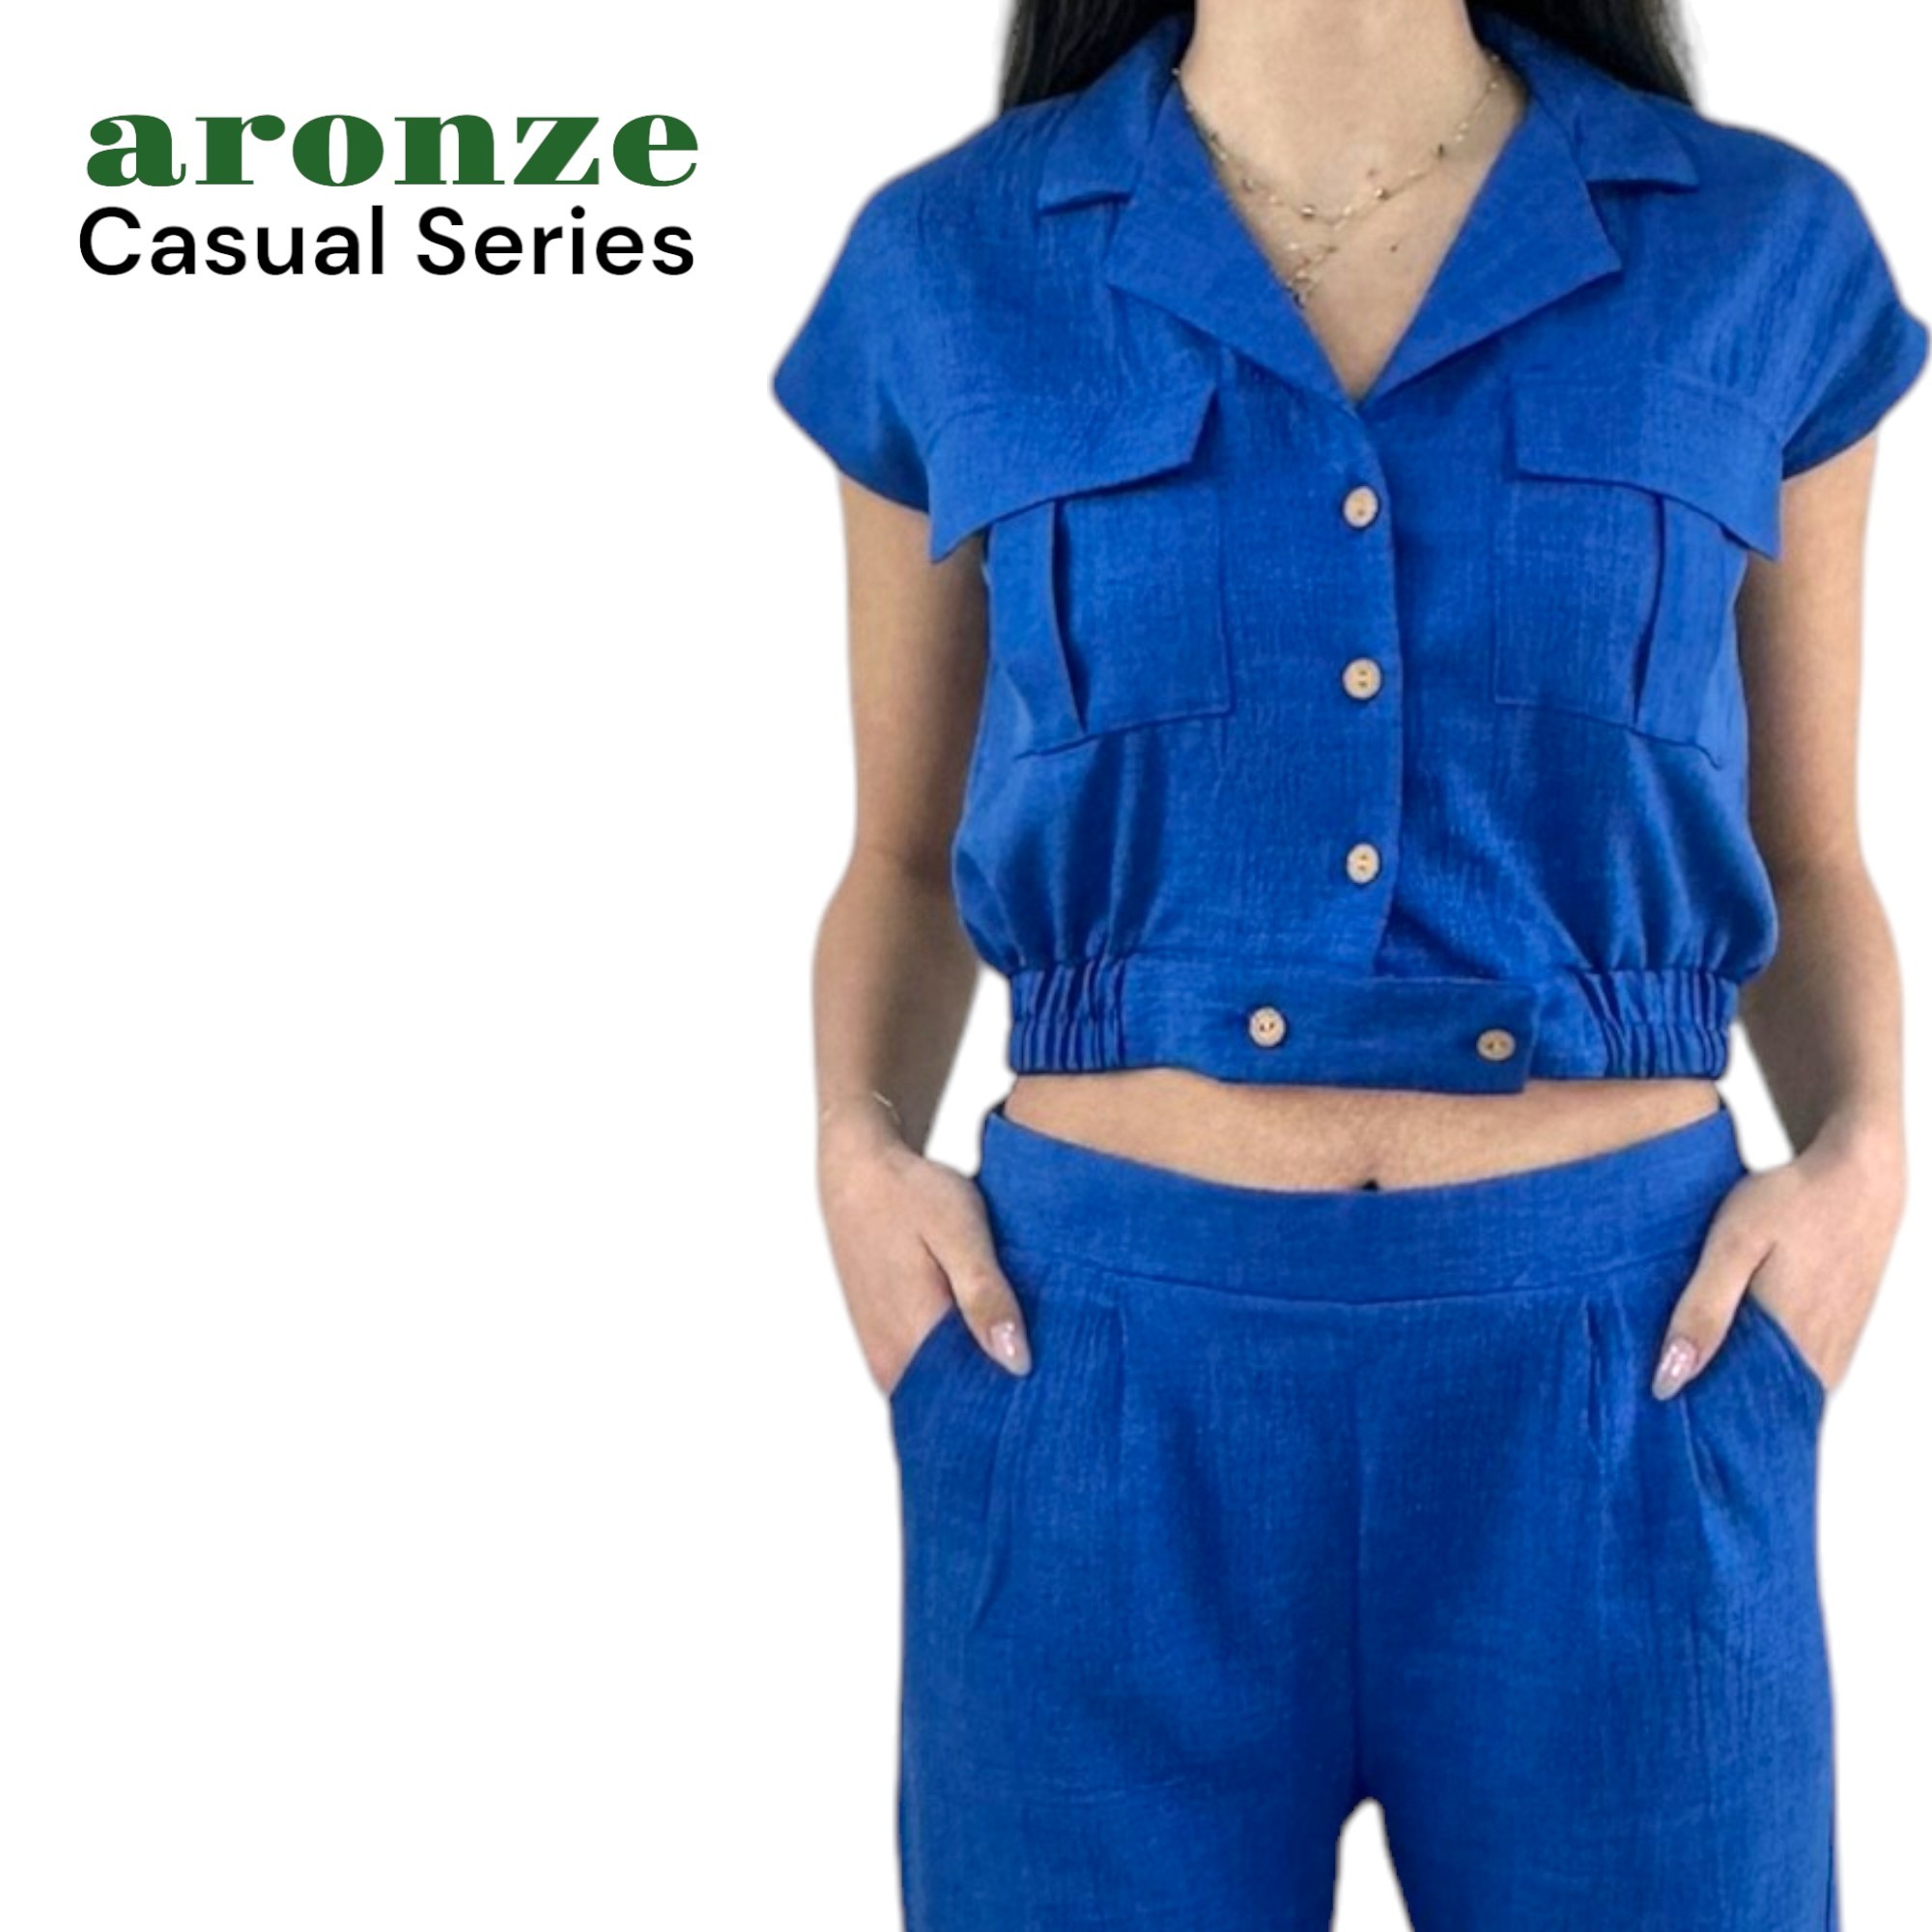 Aronze Casual Series %100 Organik Türk Pamuğu Crop Pantolon Mavi Renk Takım